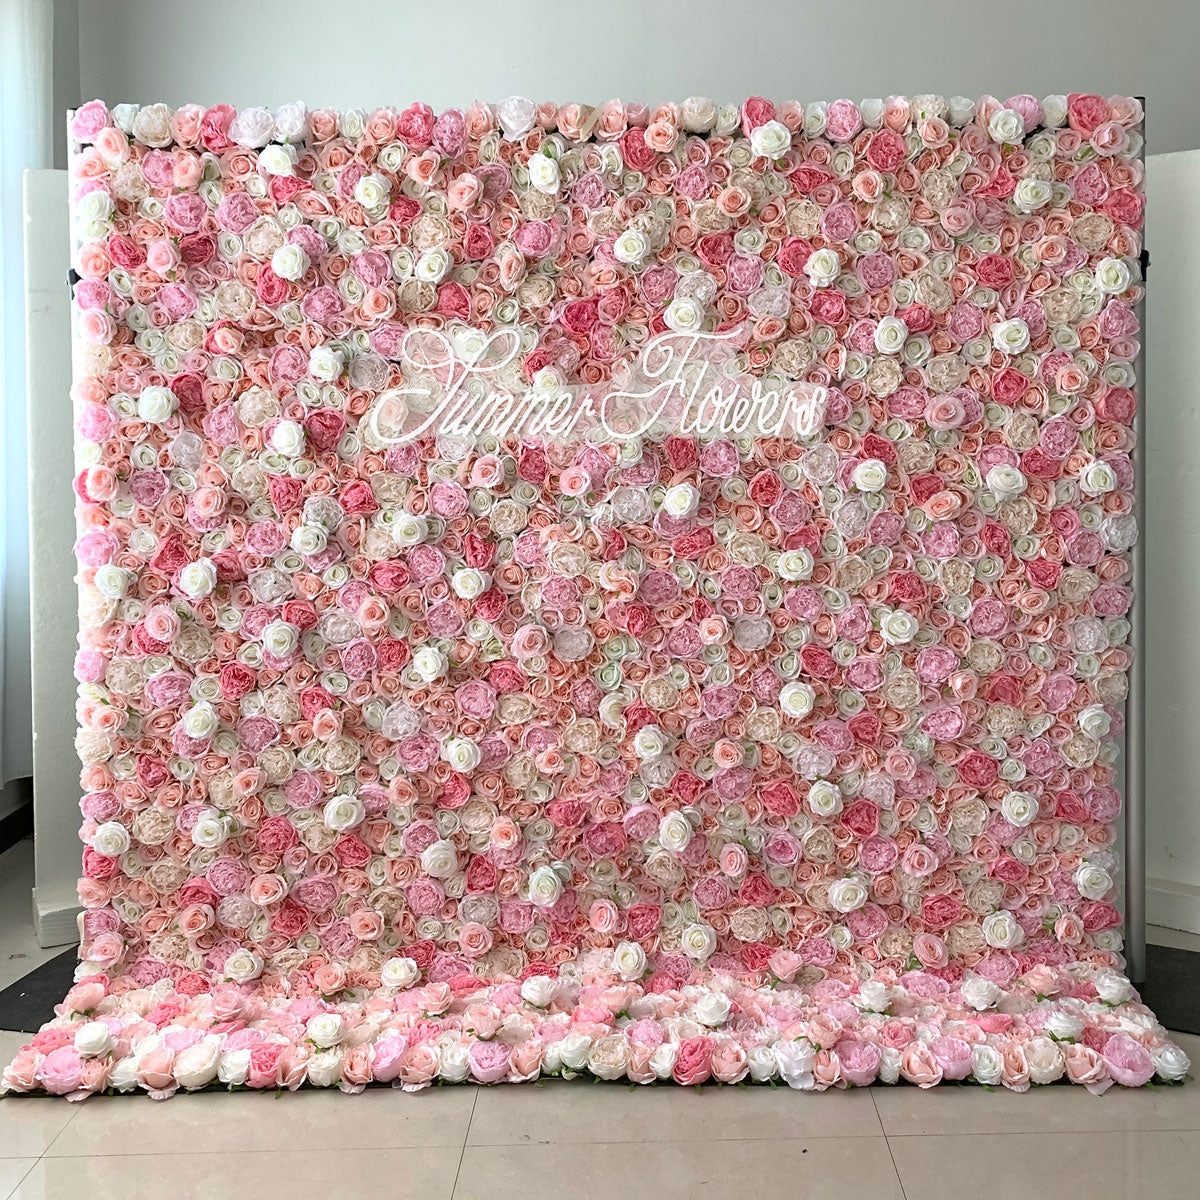 Summer Flower:CB-161 8ft*8ft Cloth Back Artificial Flower Wall Backdrop